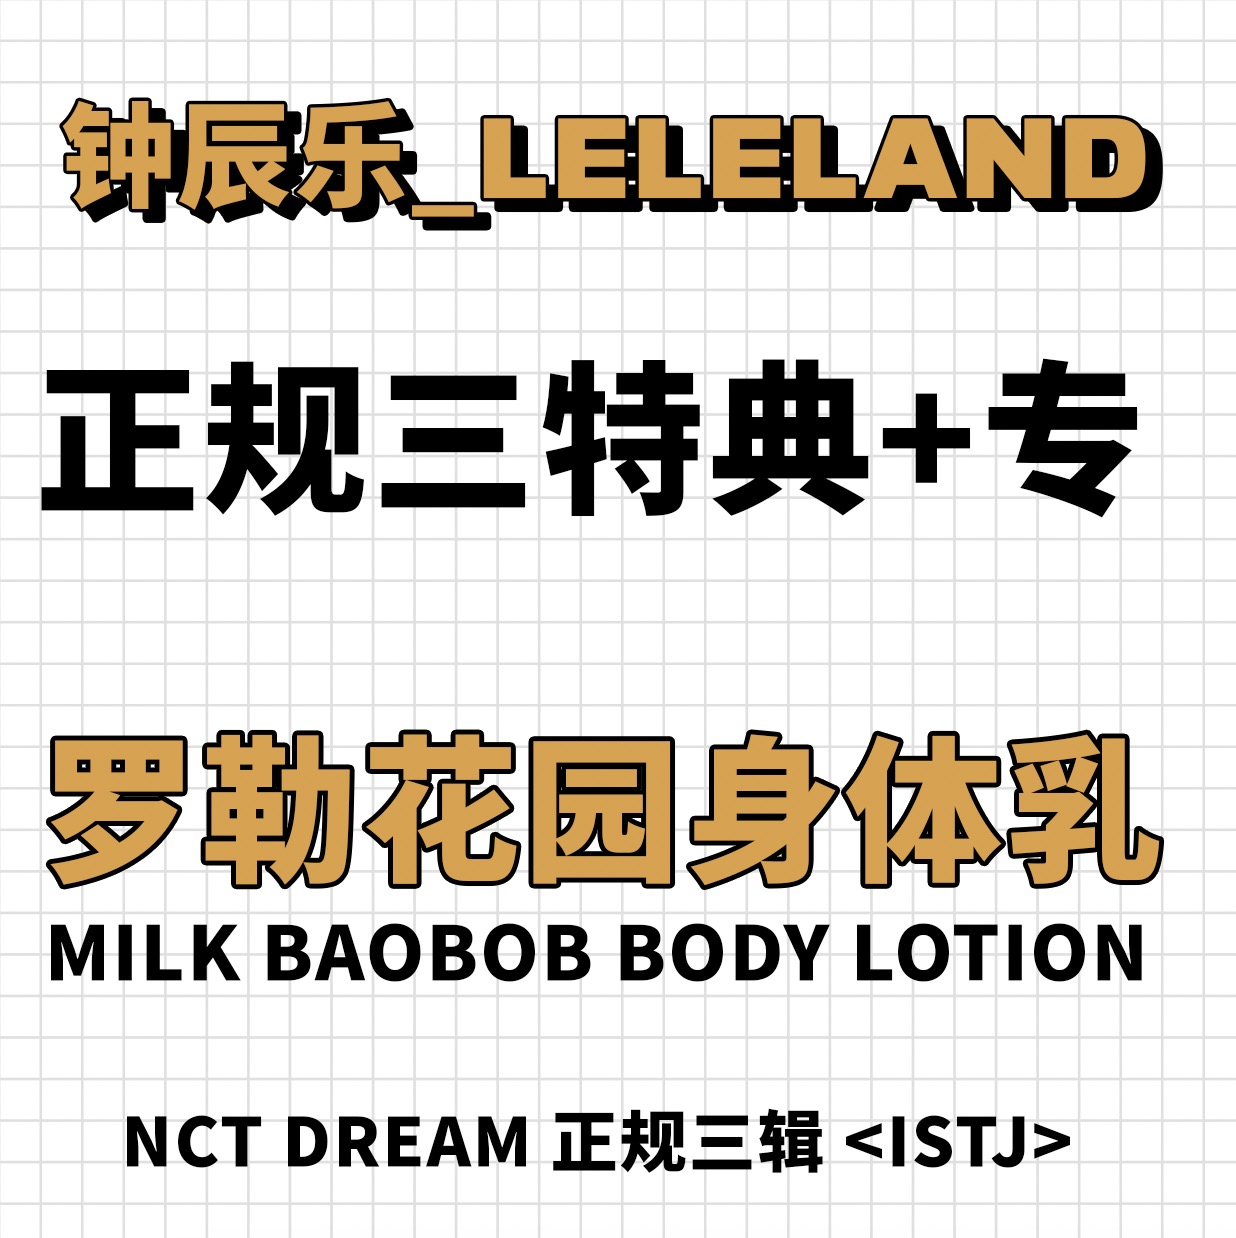 [全款 身体乳特典专] NCT DREAM - 正规3辑 [ISTJ]_钟辰乐吧_ChenLeBar